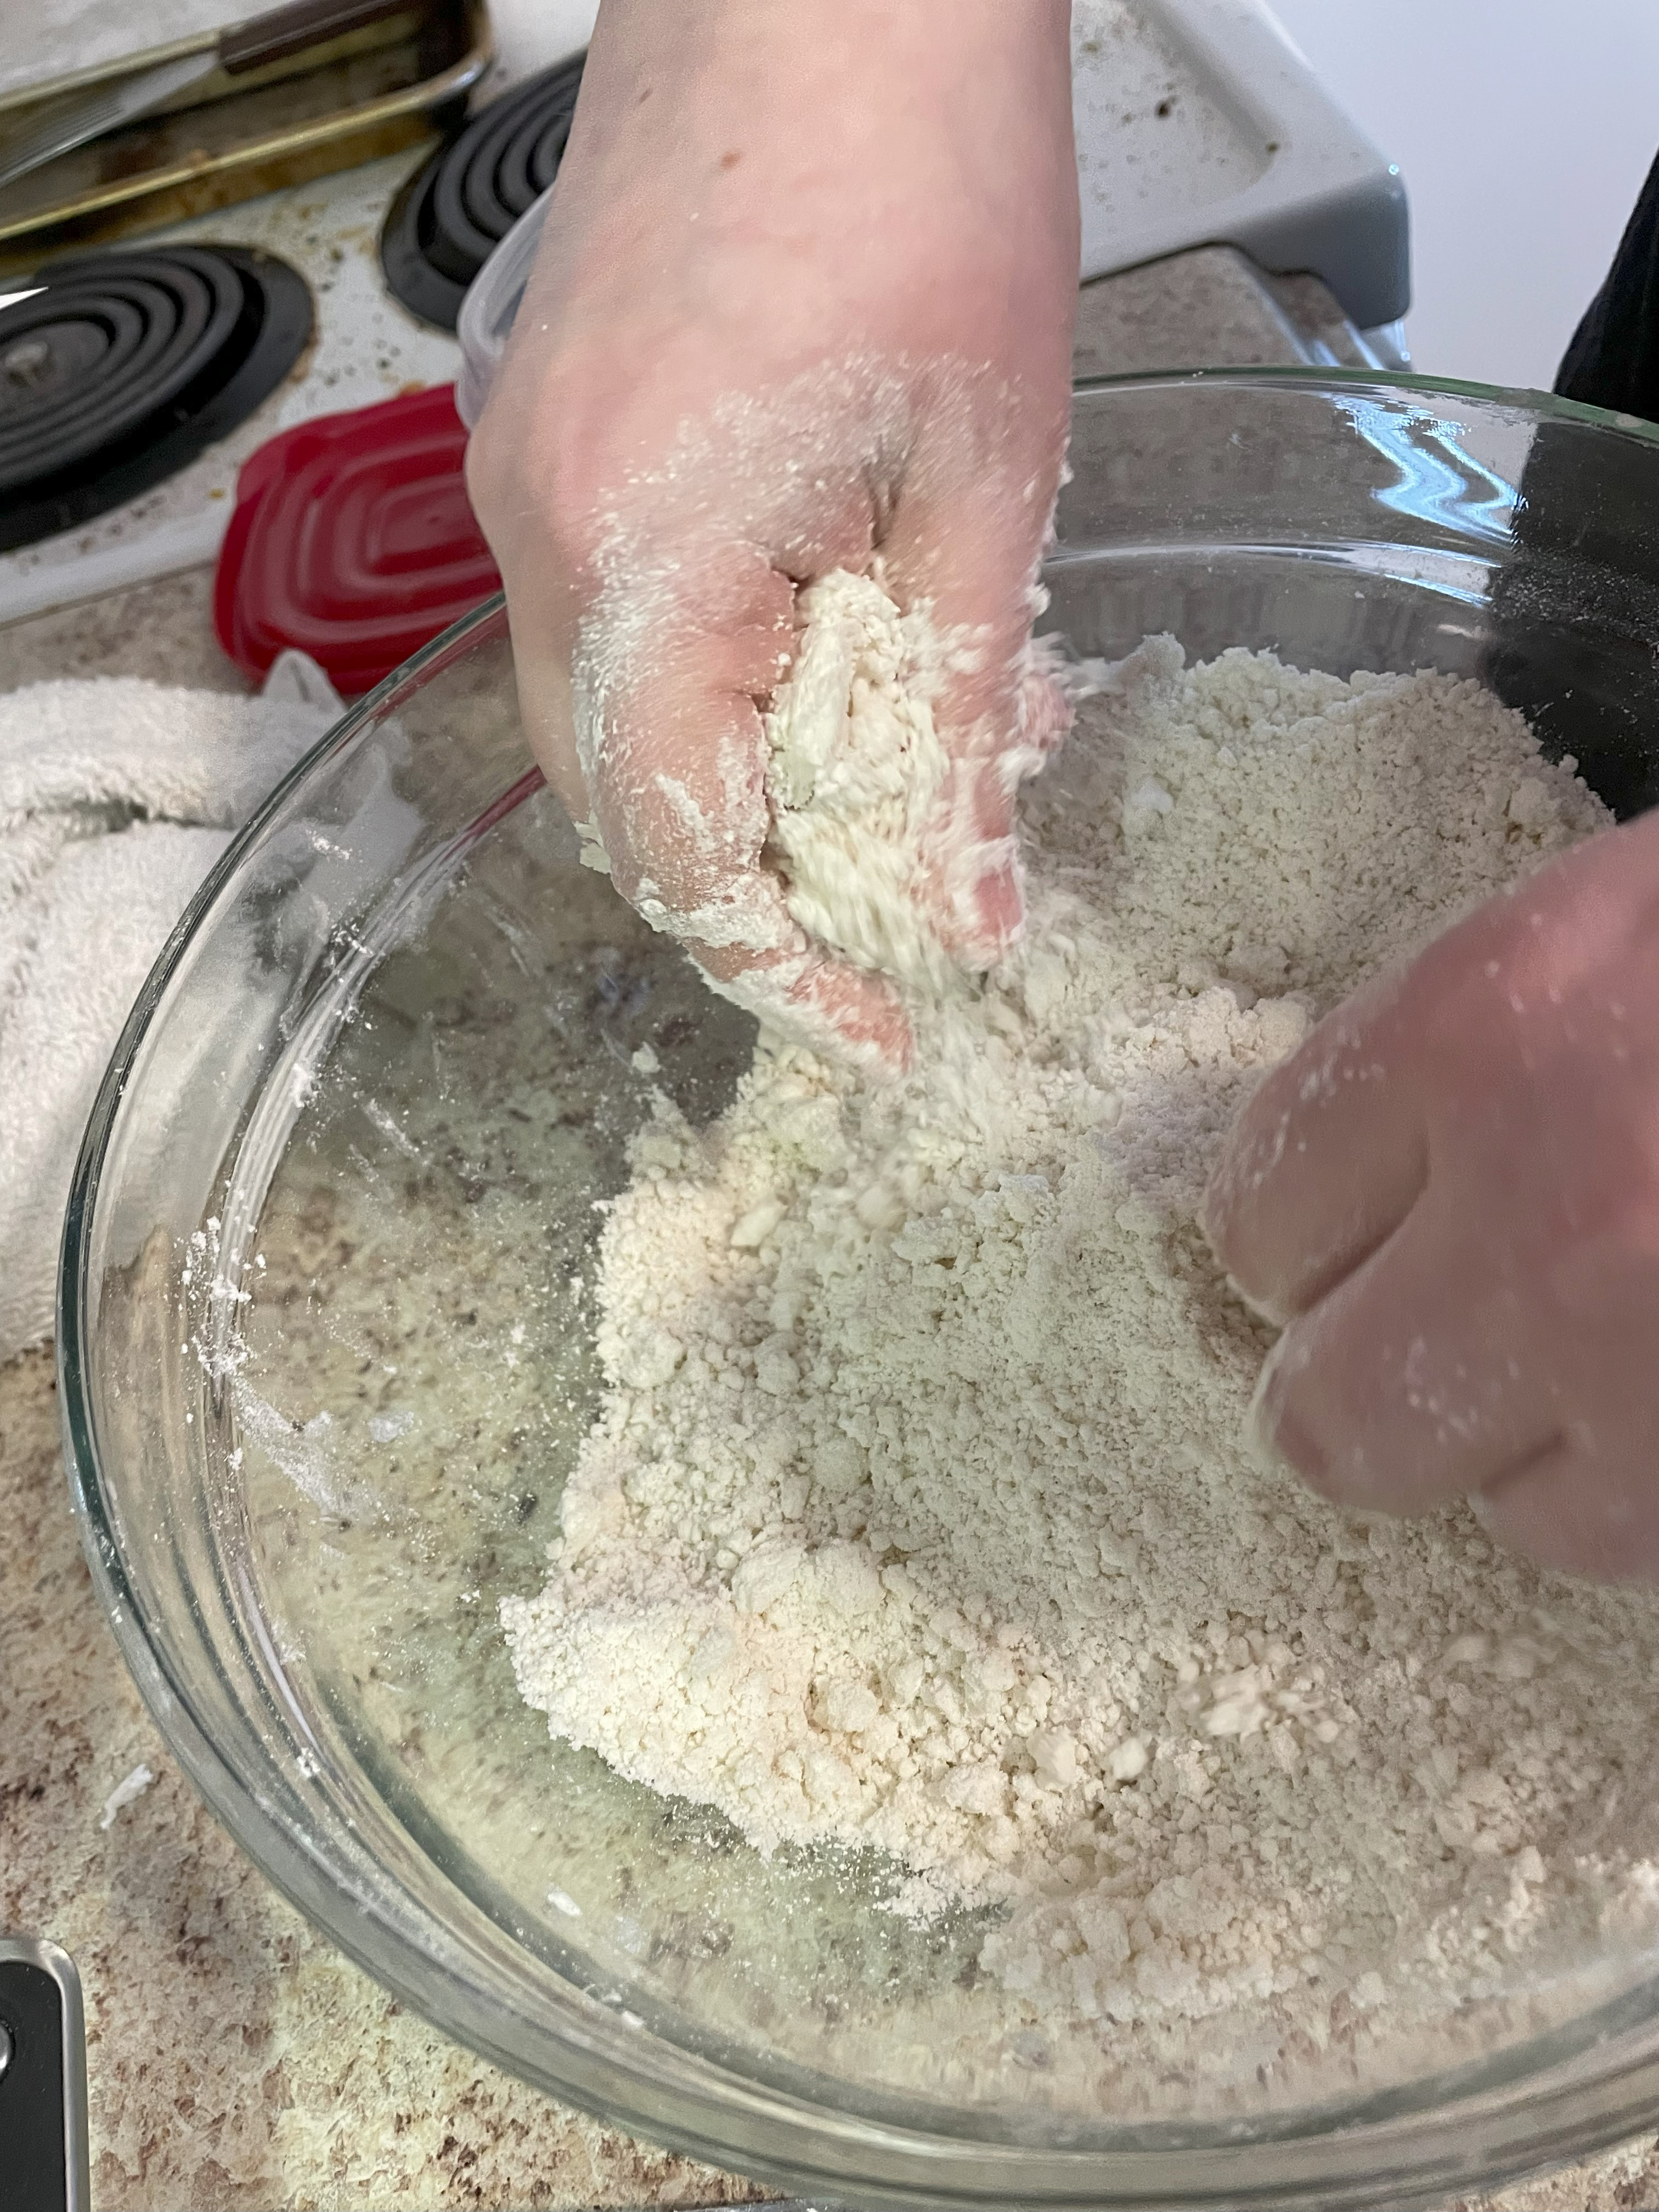 Hands cutting shortening into flour to make pie crust